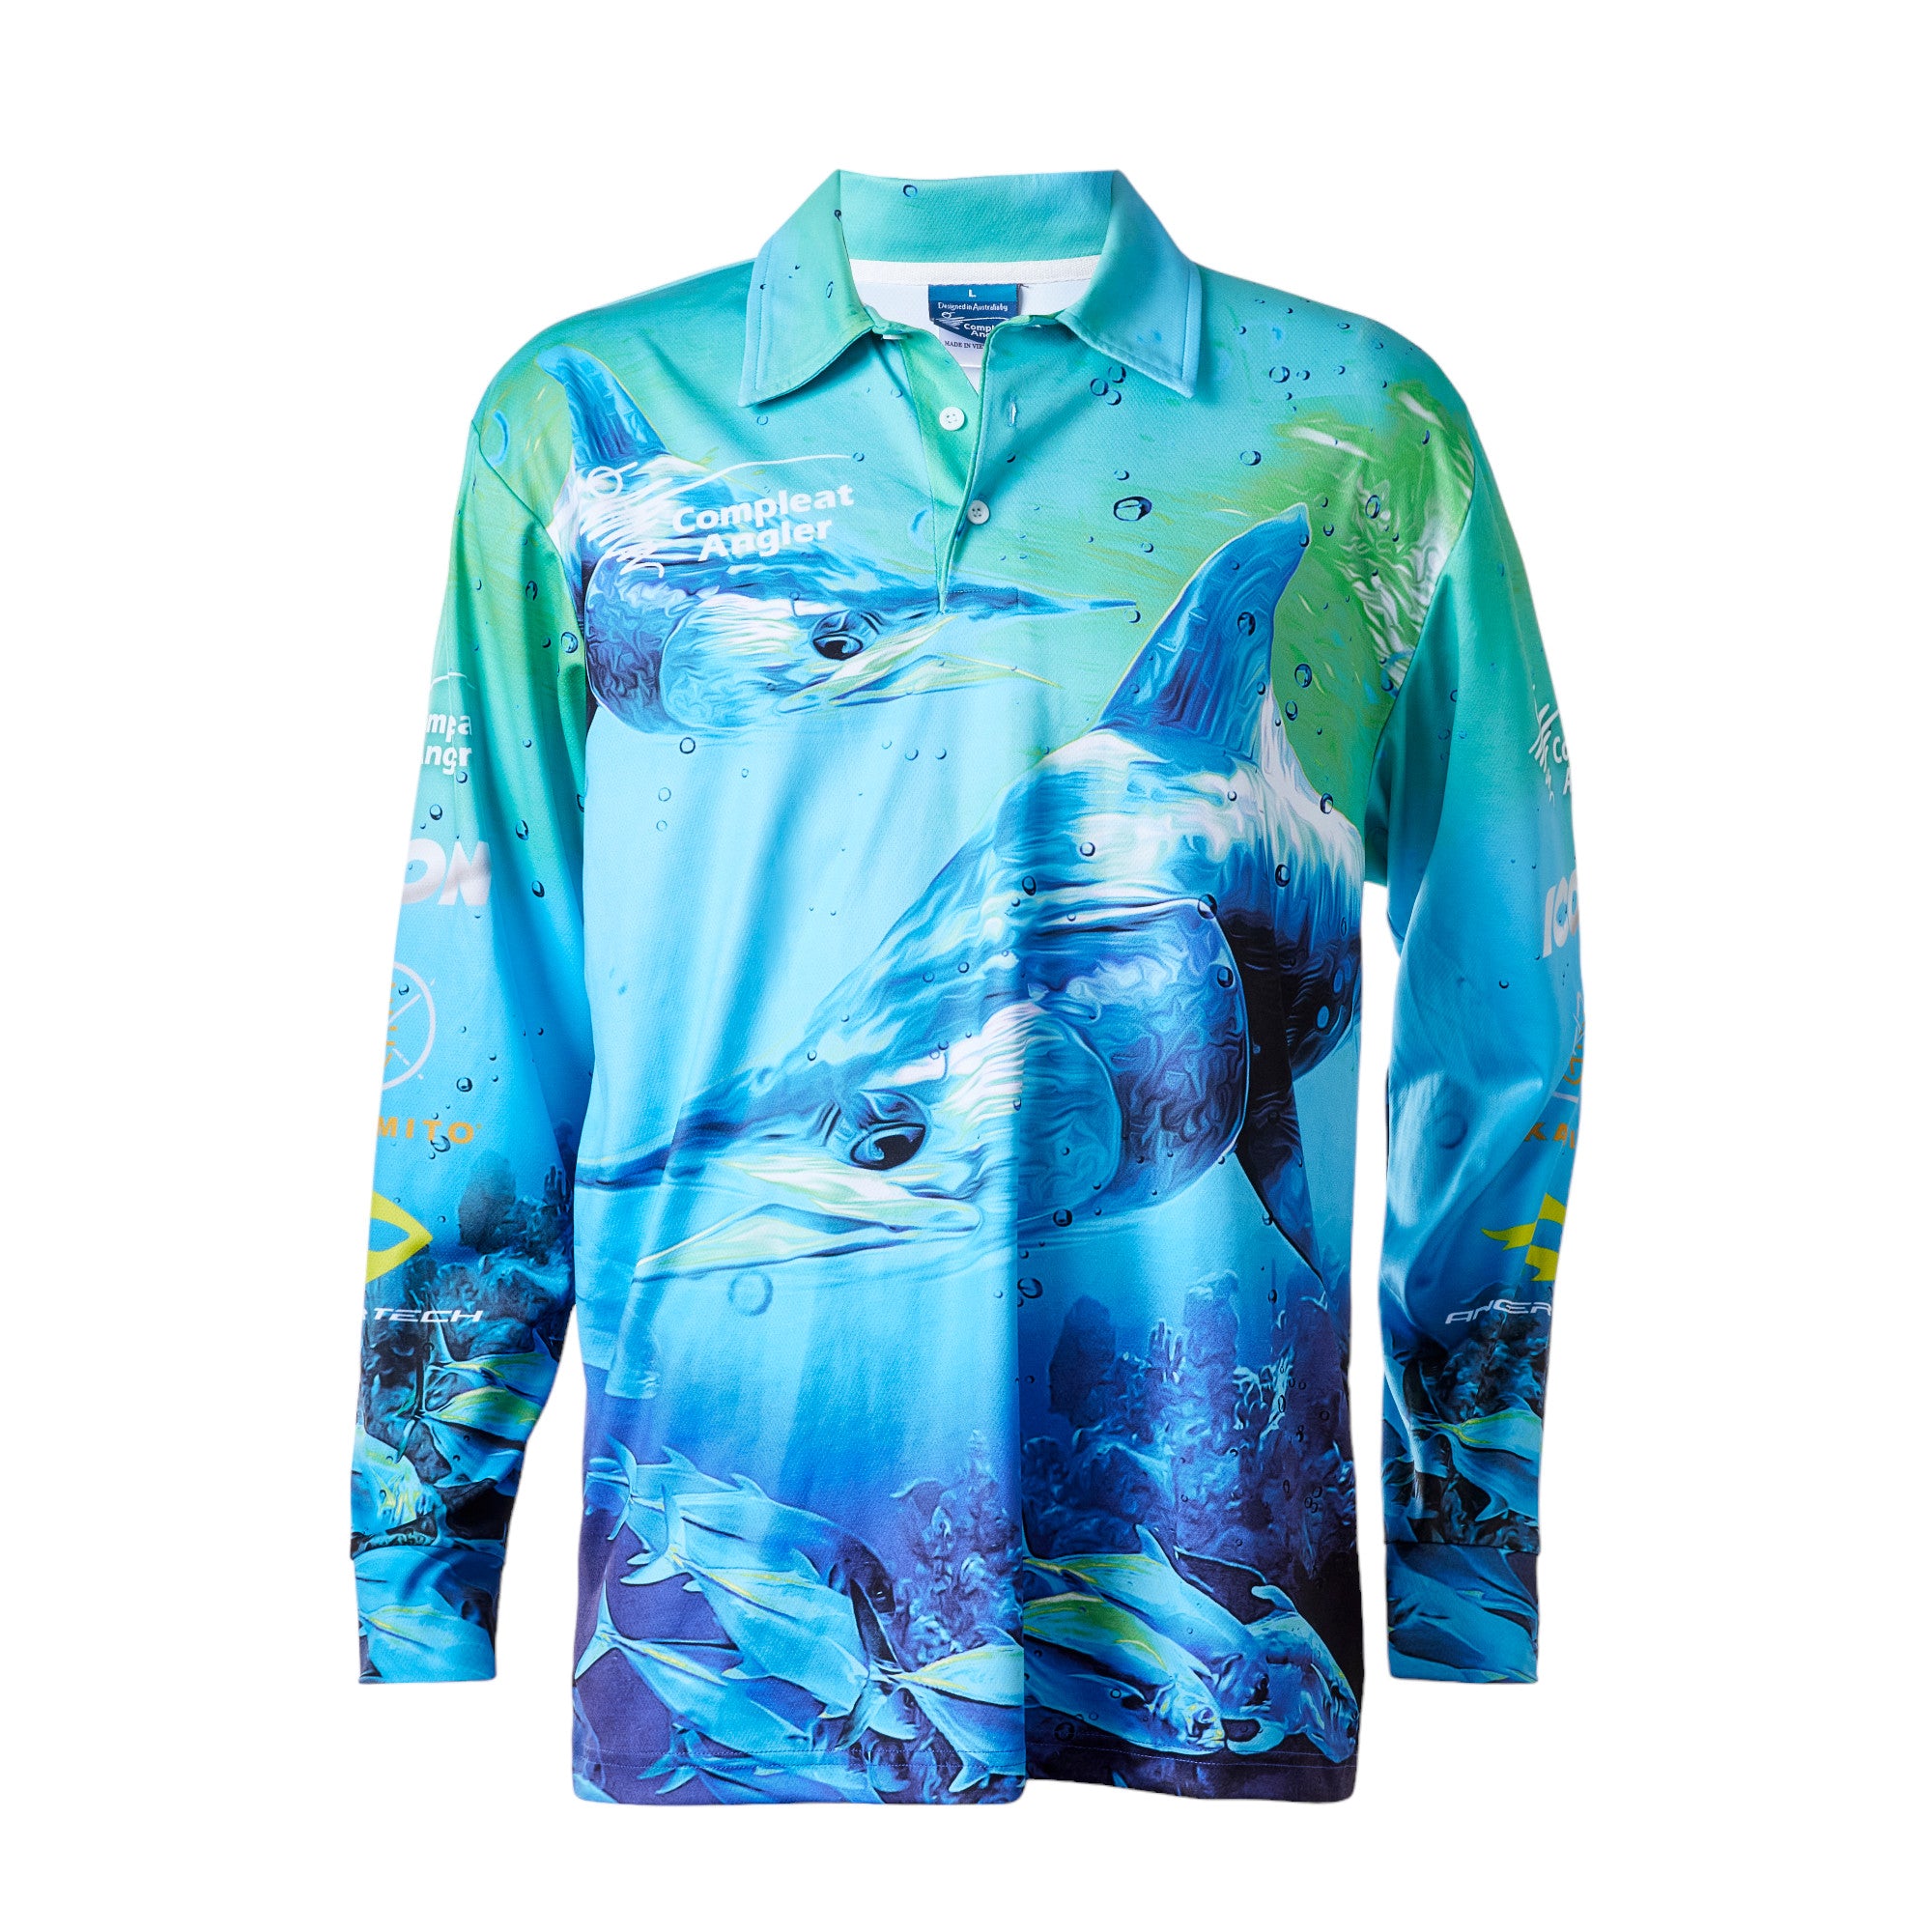 Compleat Angler Marlin Tournament Kids Shirt